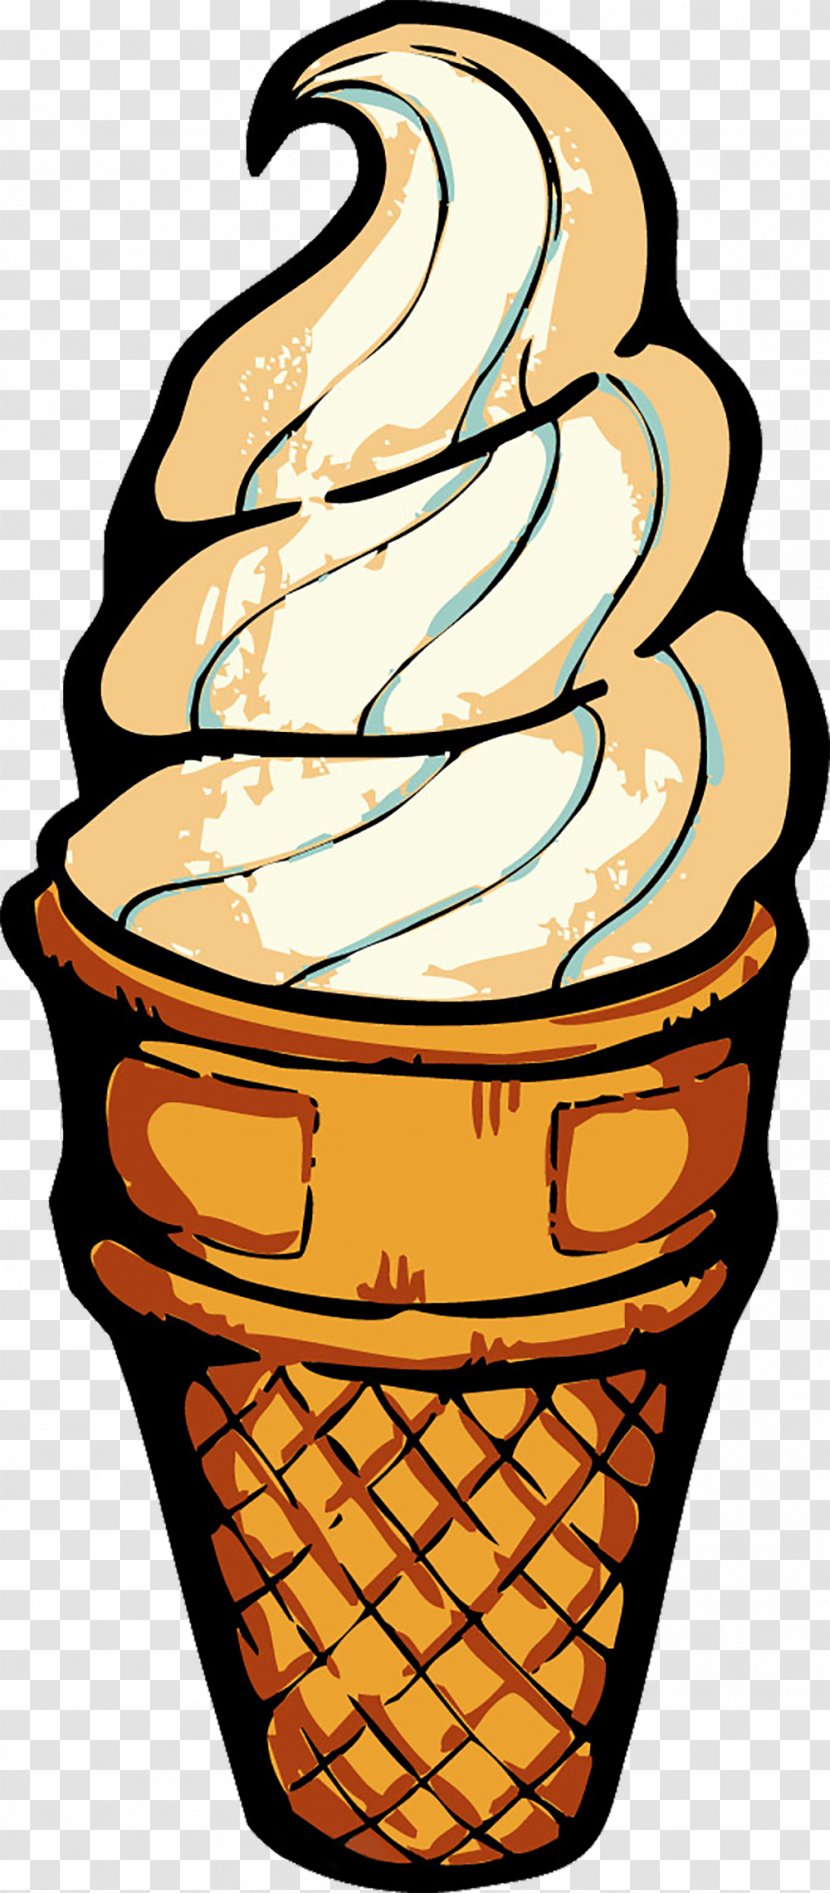 Ice Cream Cone Illustration - Frozen Dessert - Cartoon Transparent PNG